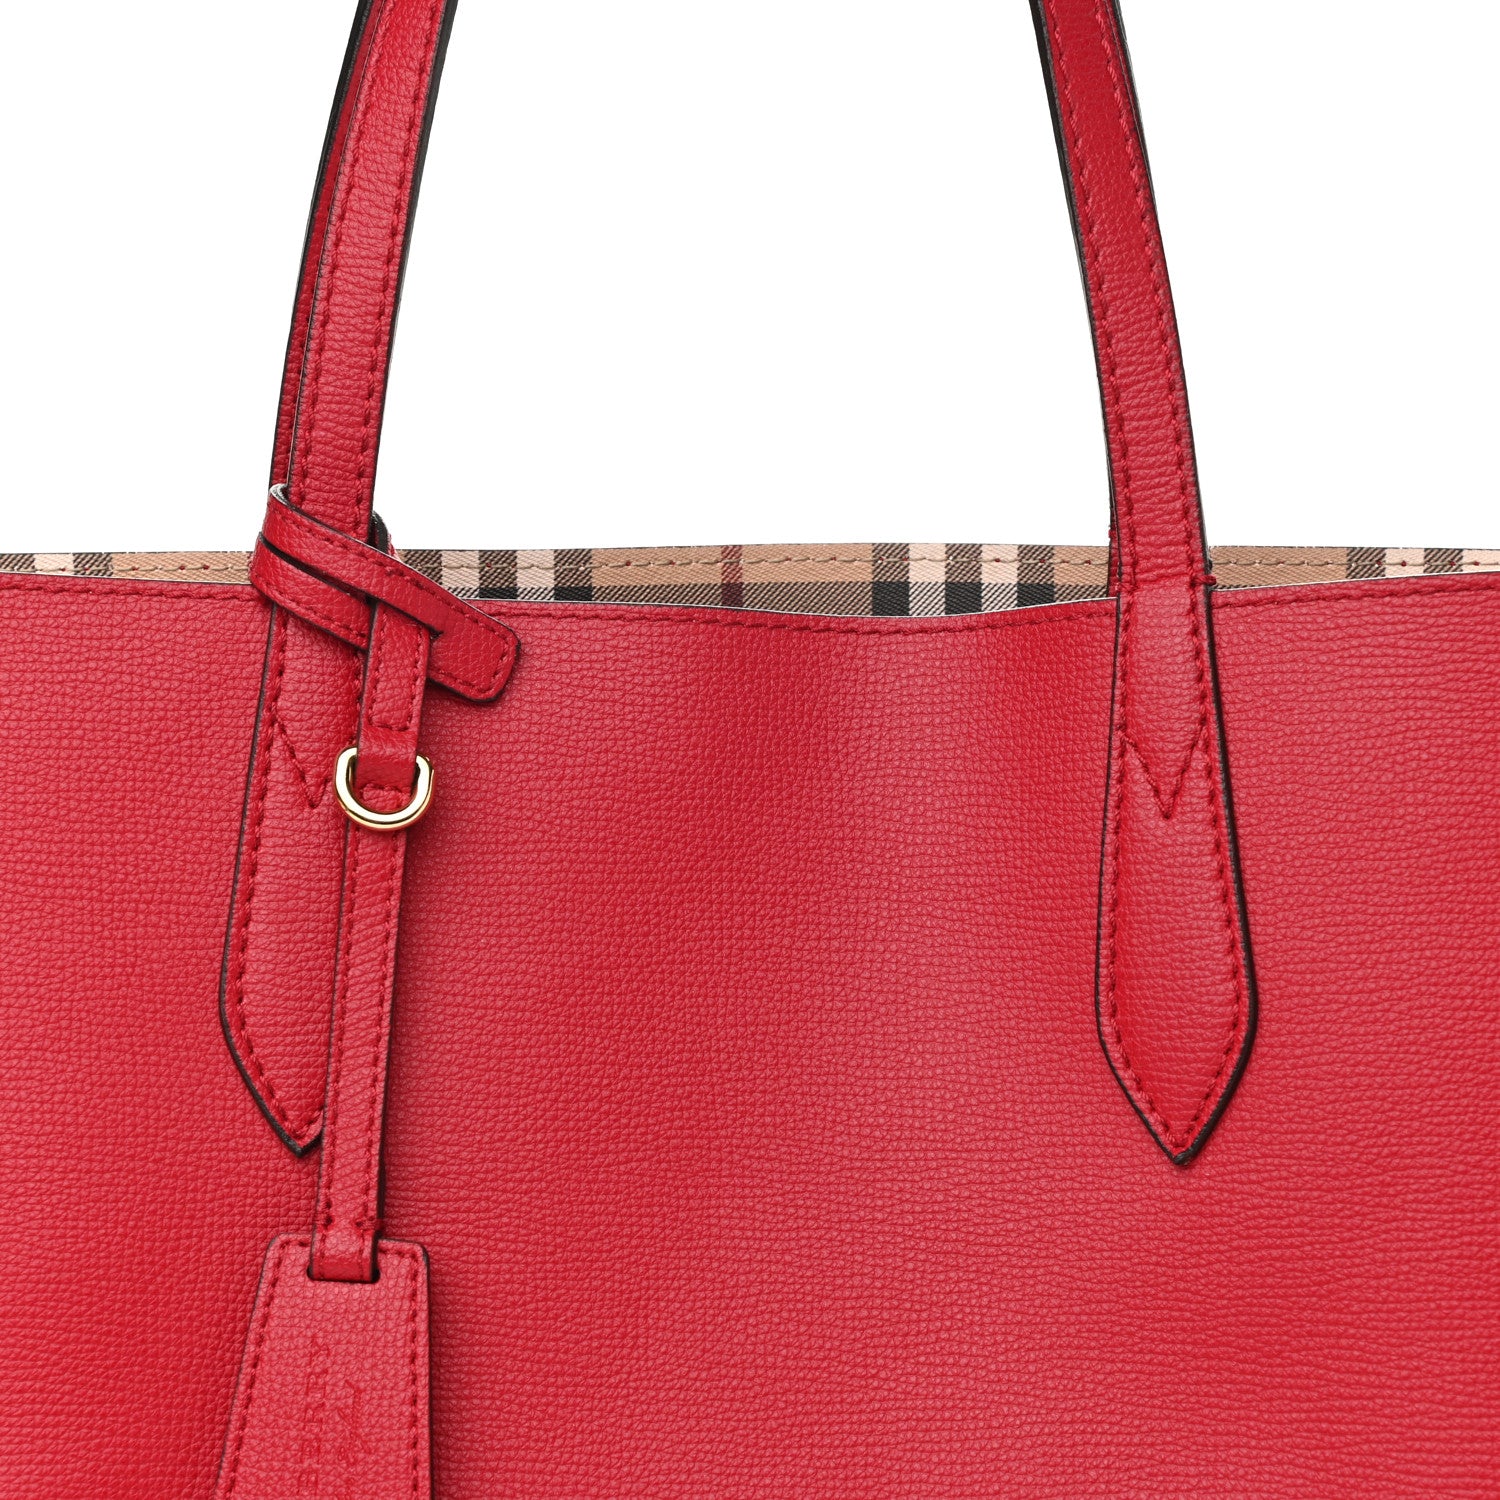 Burberry Haymarket Check Tote Bag - Red Totes, Handbags - BUR361302